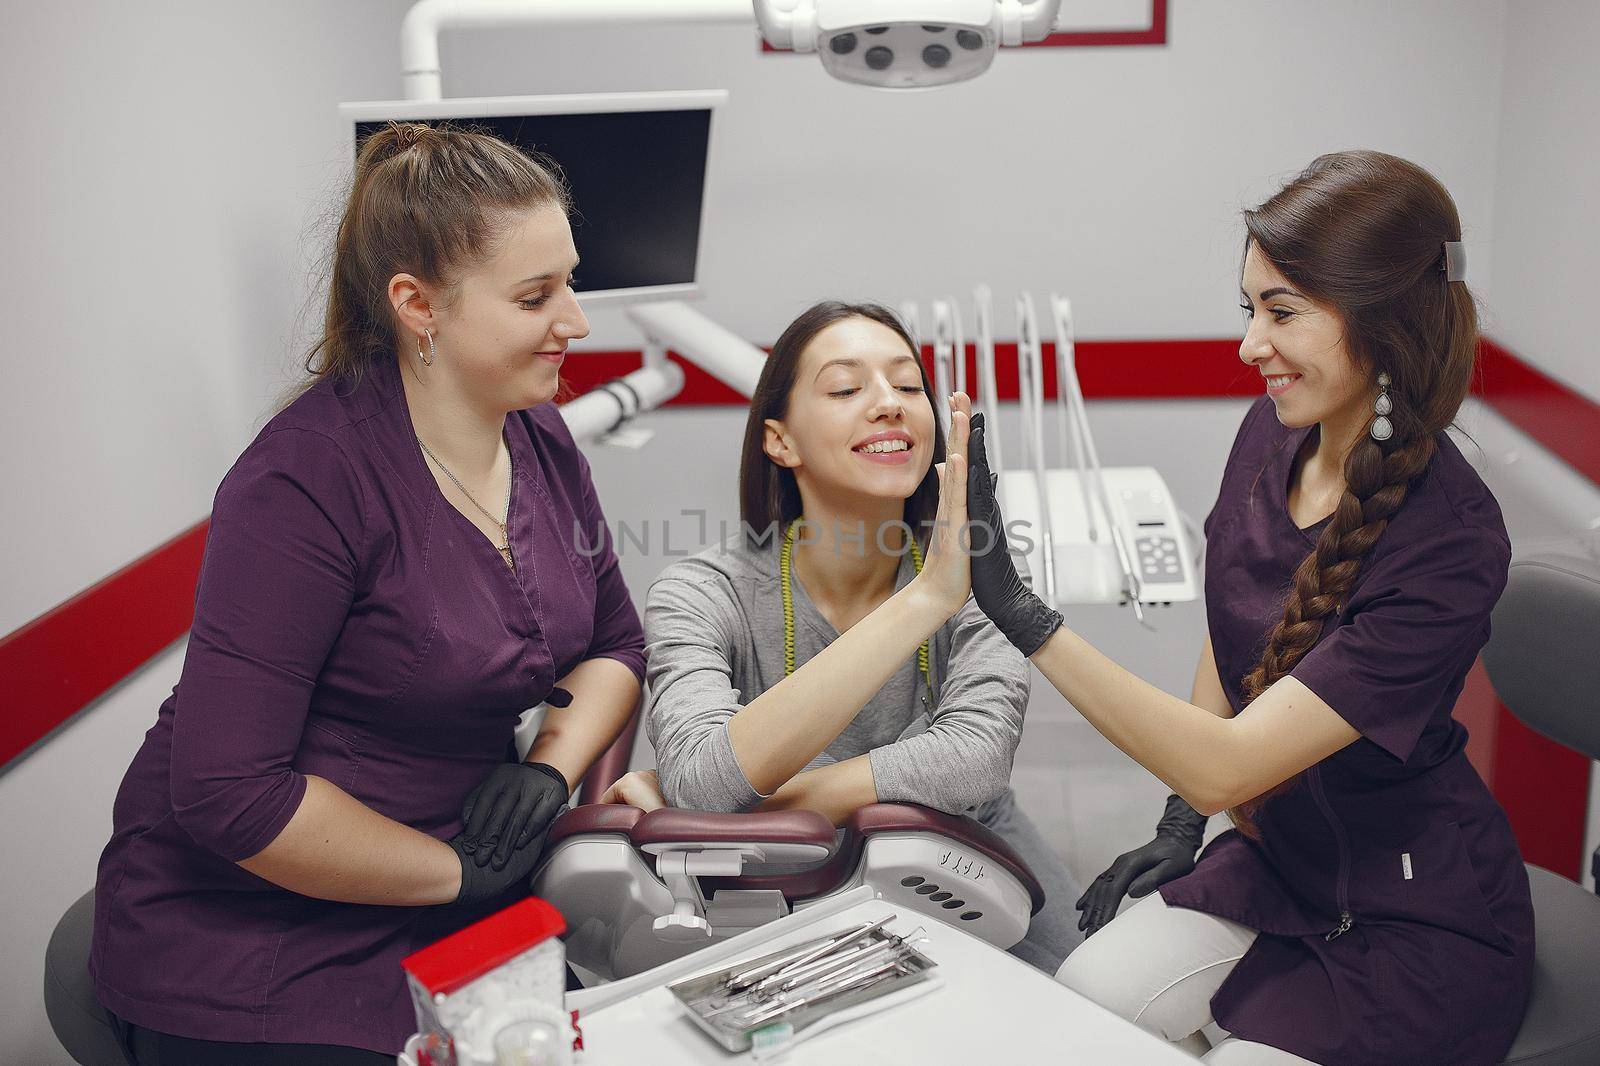 Beautiful lady in the dentist's office. Woman in a purple uniform